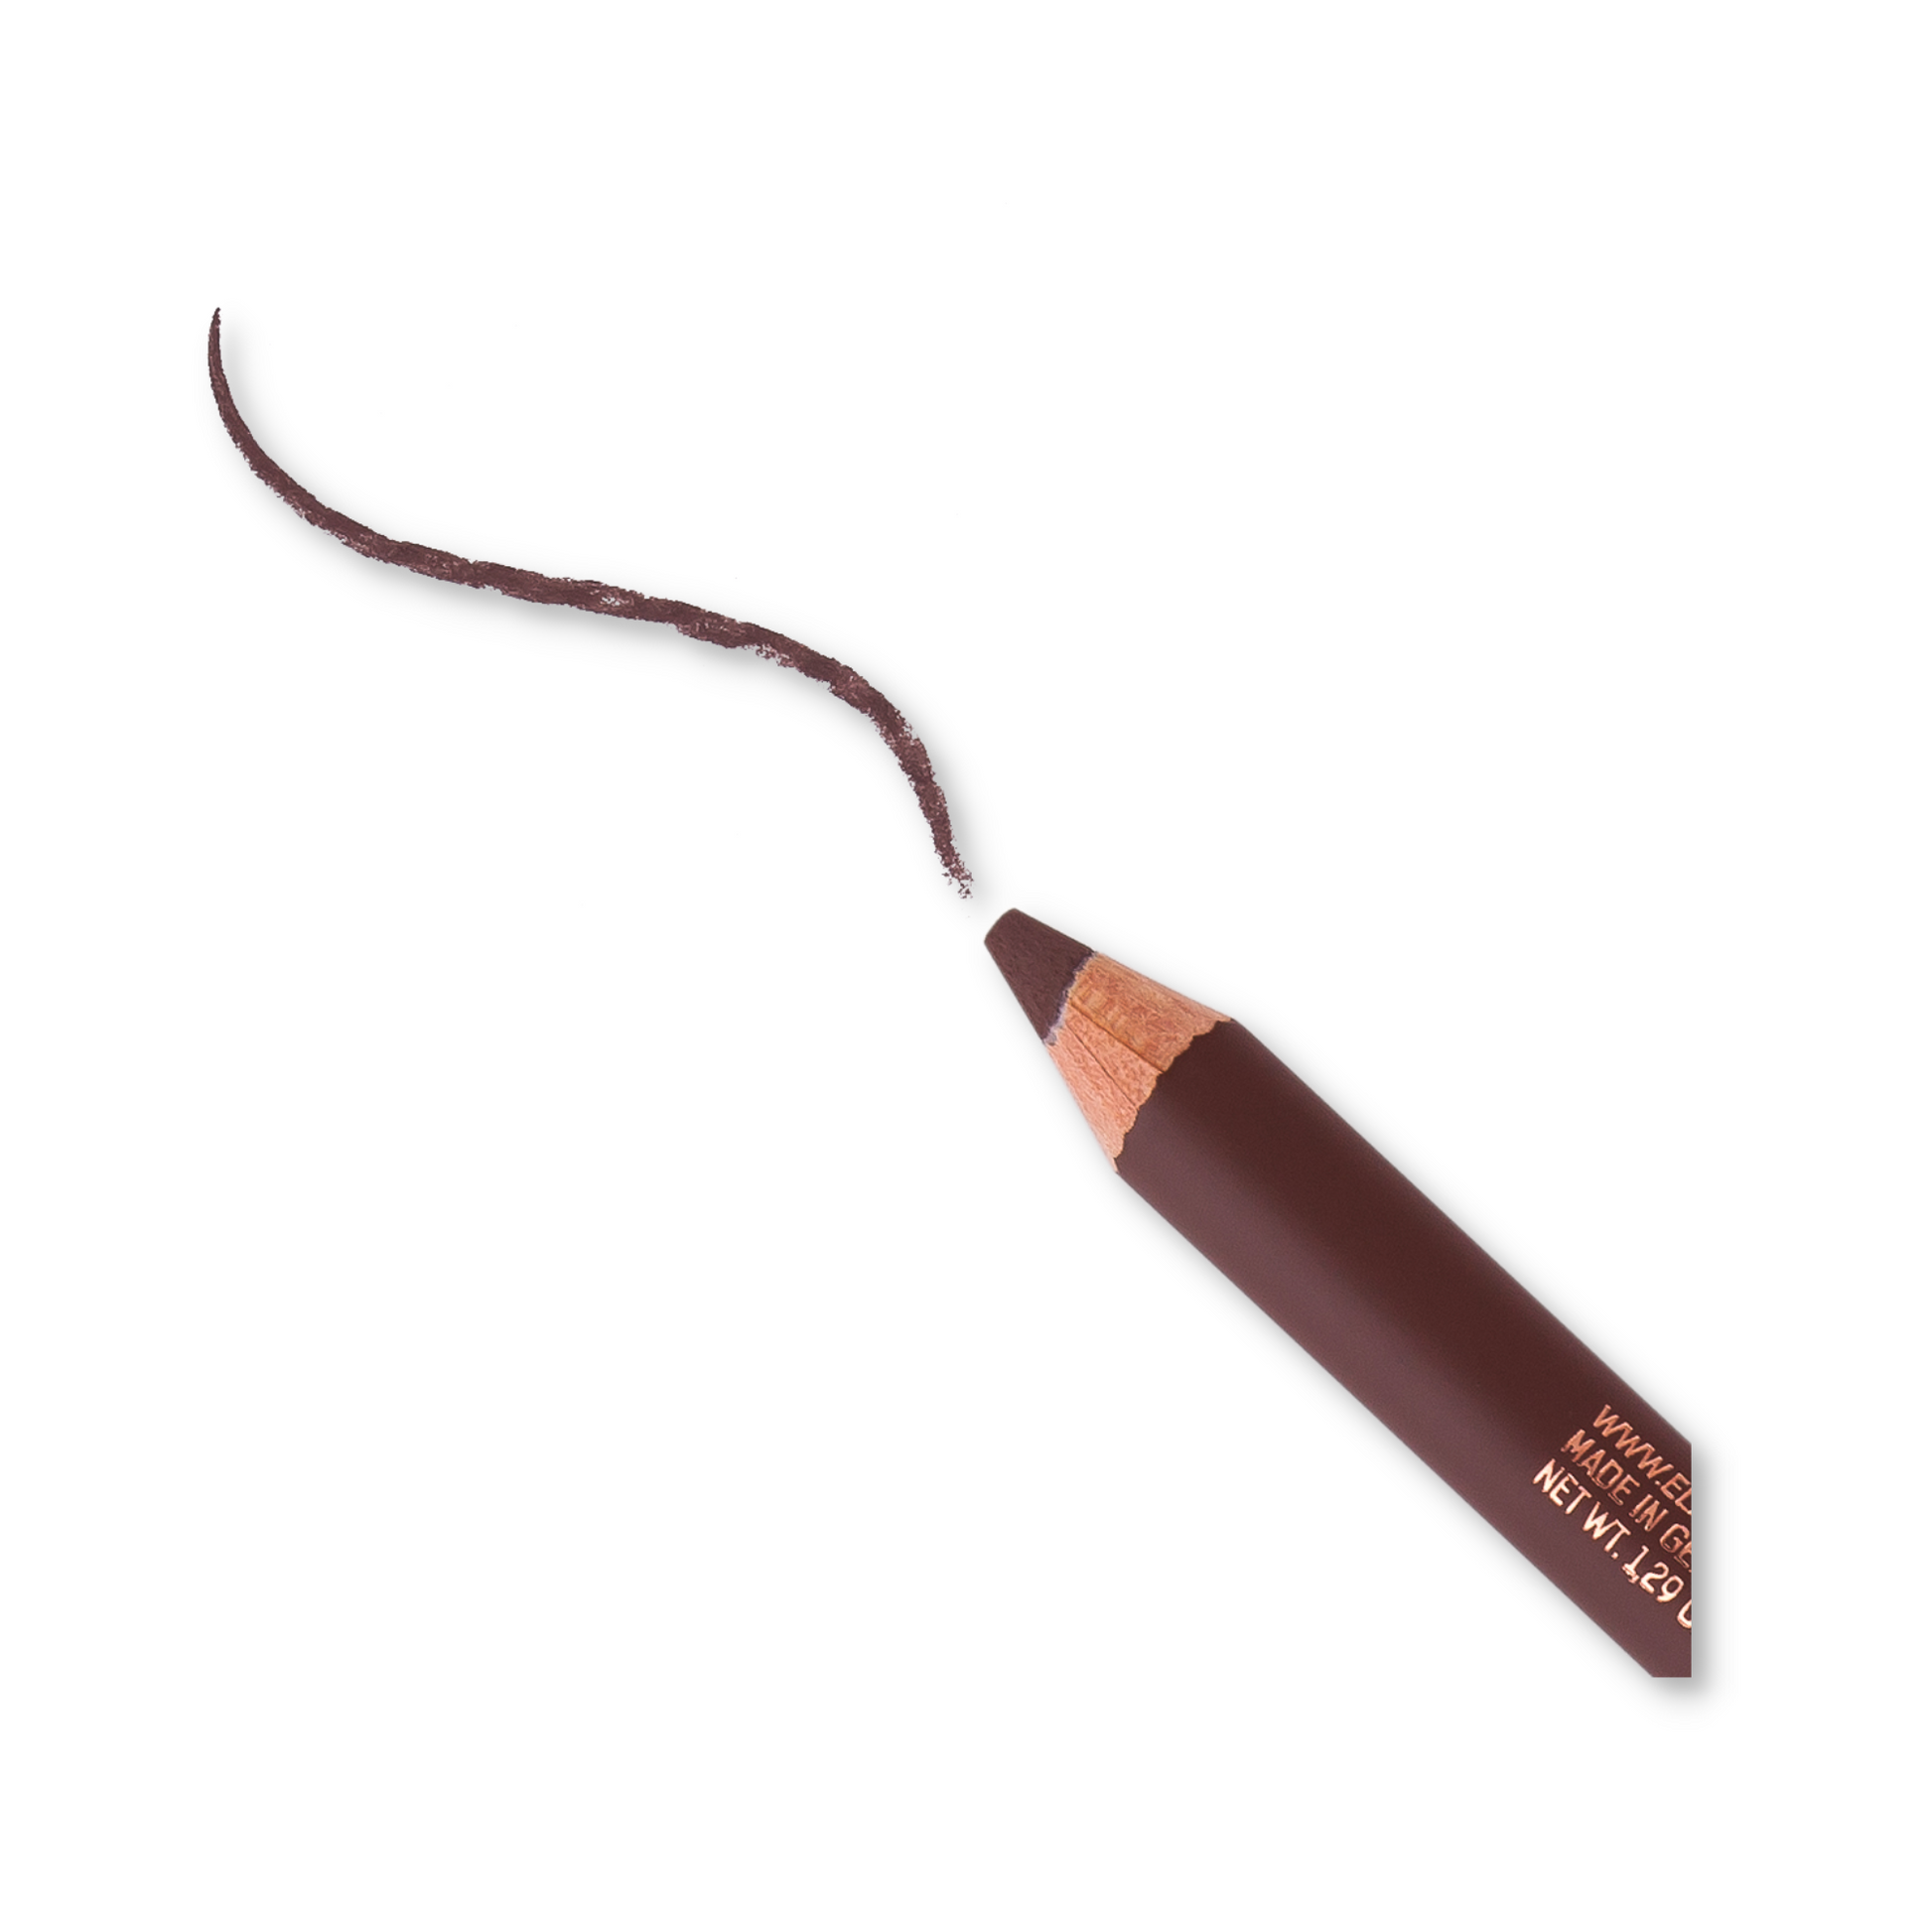 Élan Powder Eyebrow Pencil Brow Liner Pro B01 - Medium Brown